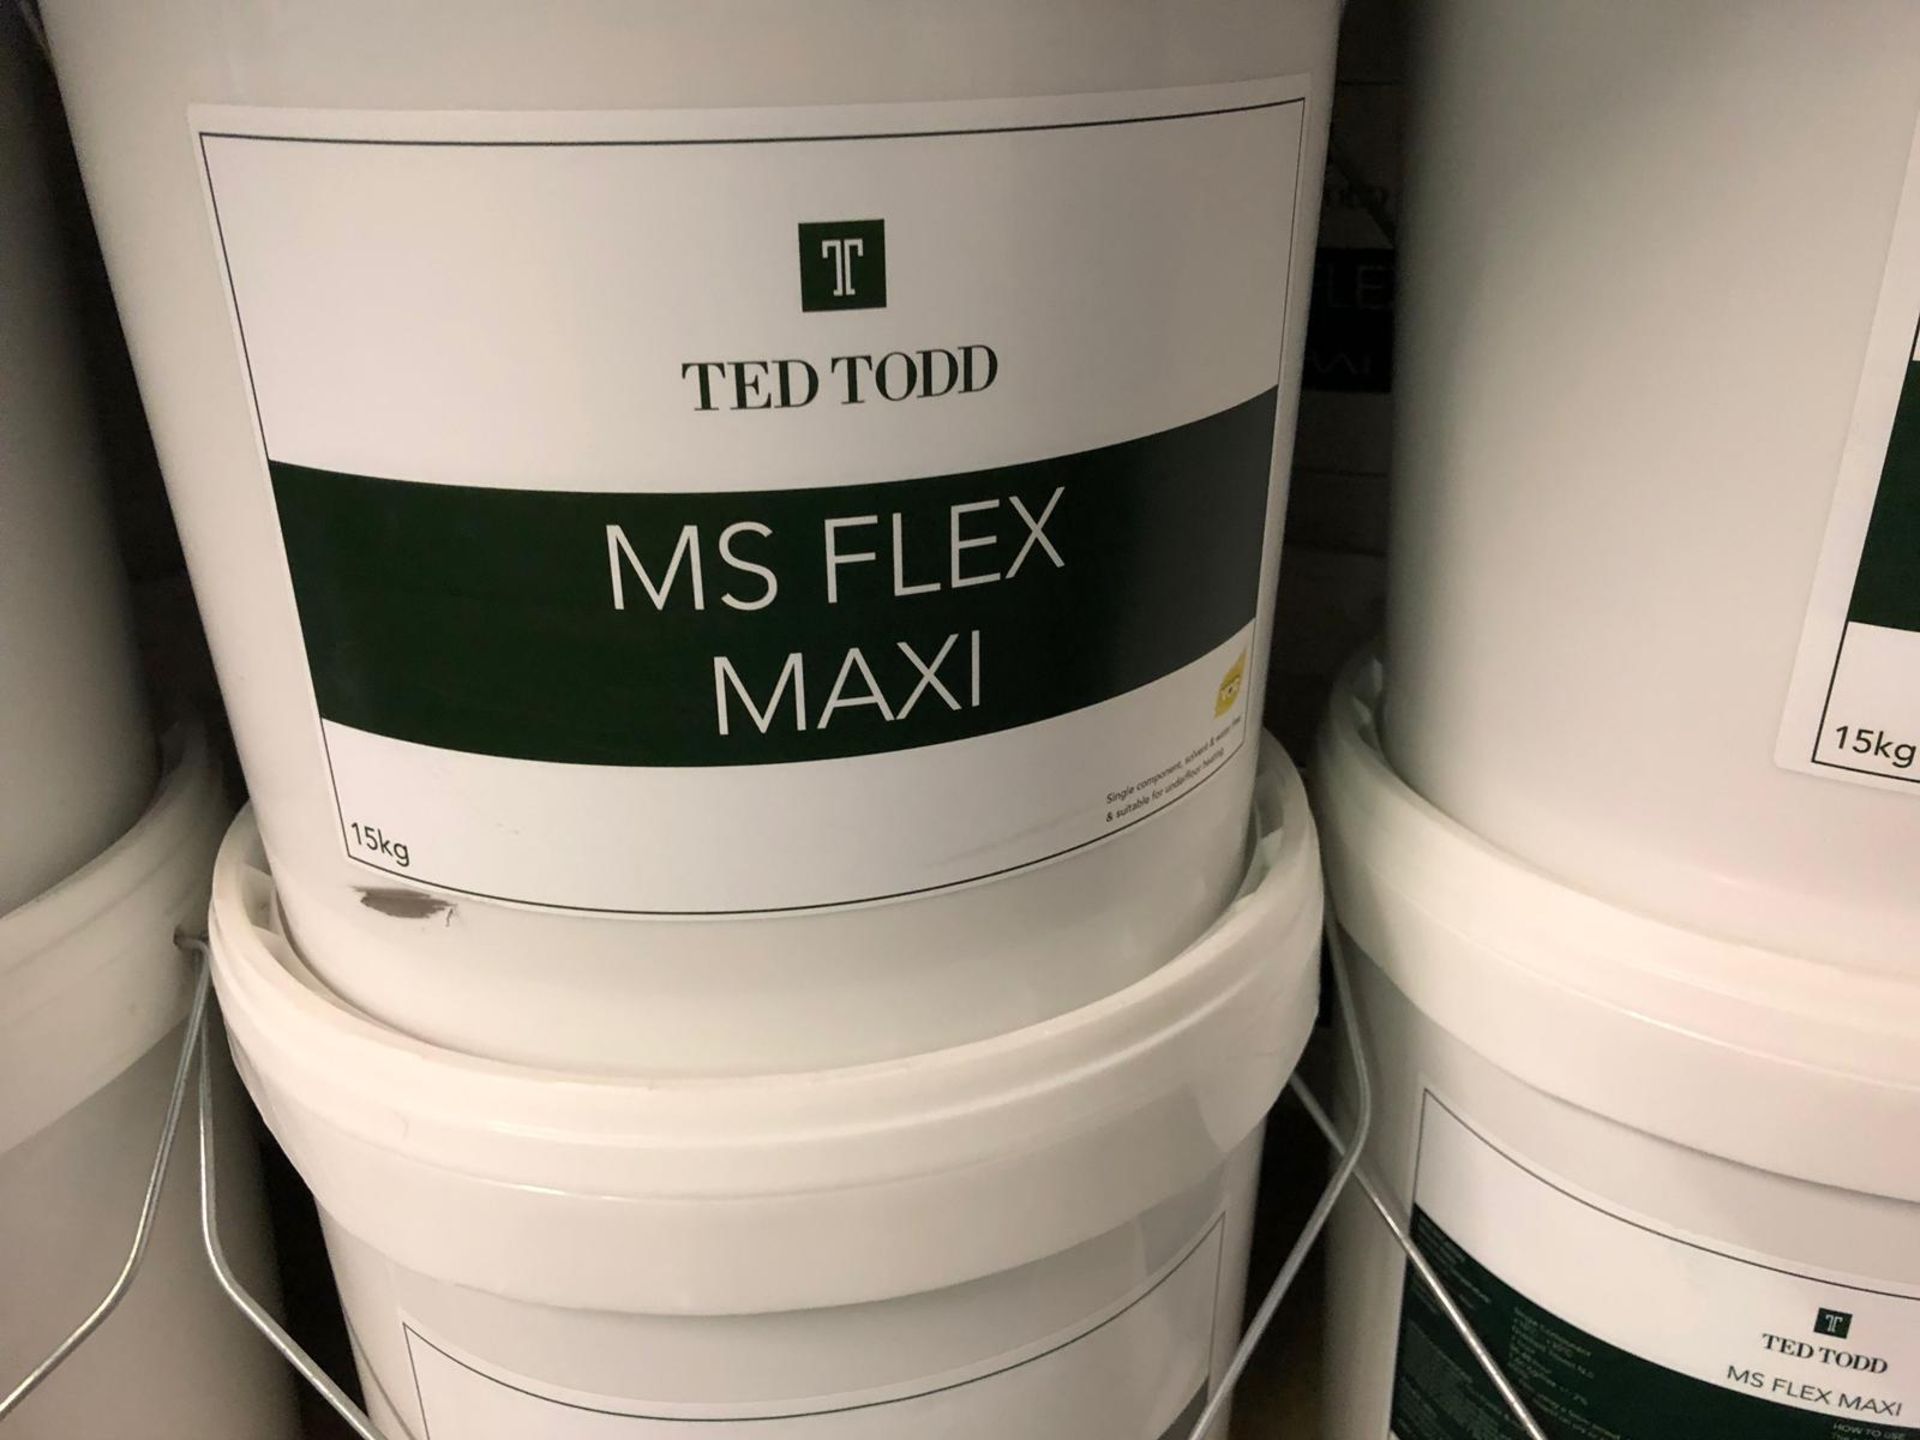 2 x 15Kg Tubs Of Ted Todd Maxi Flex Adhesive Cost £100 Per 15Kg Tub